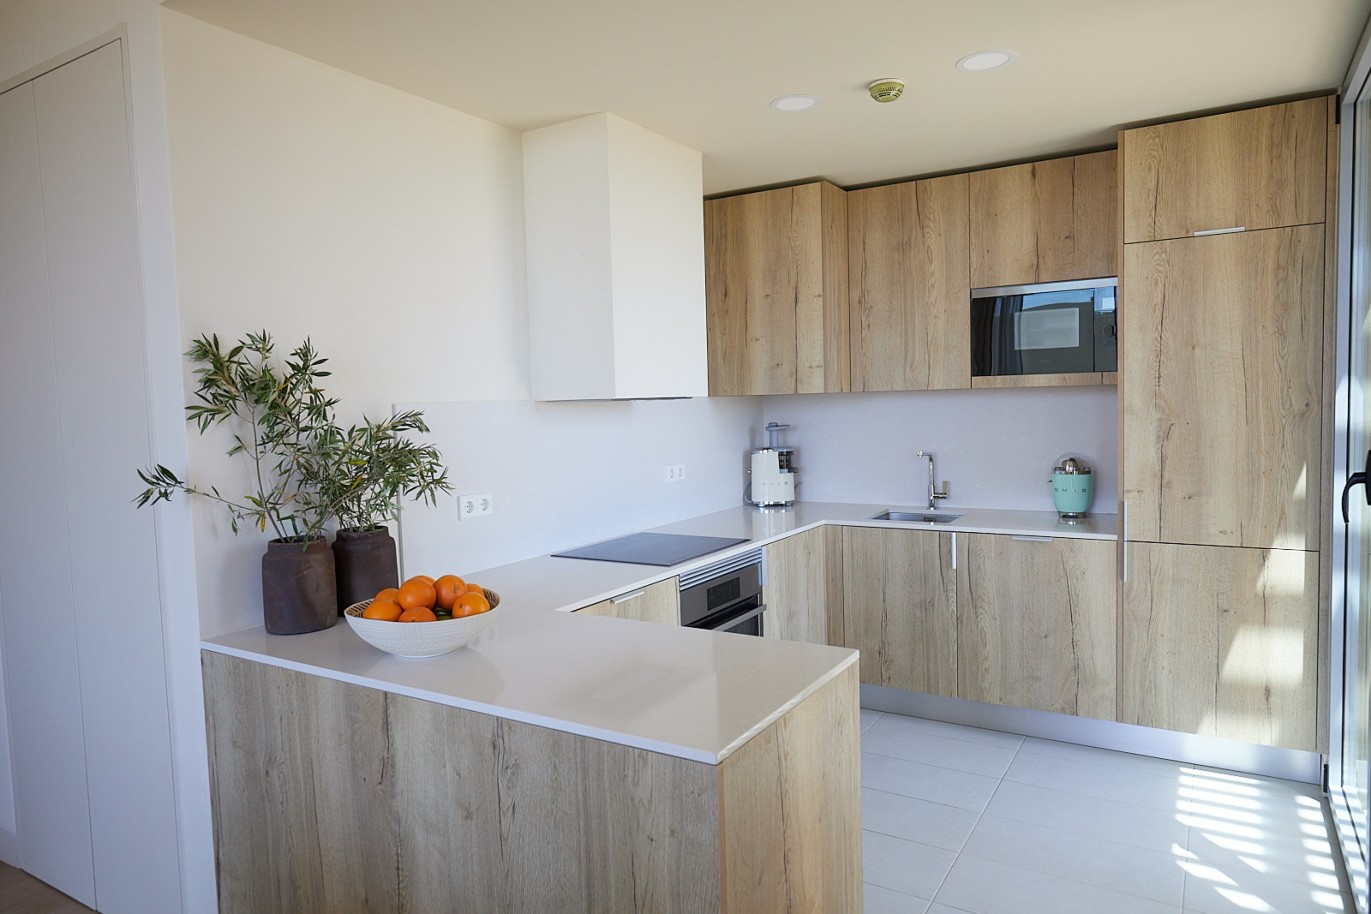 2 bedroom apartment in resort, for sale in Porches, Algarve_229089